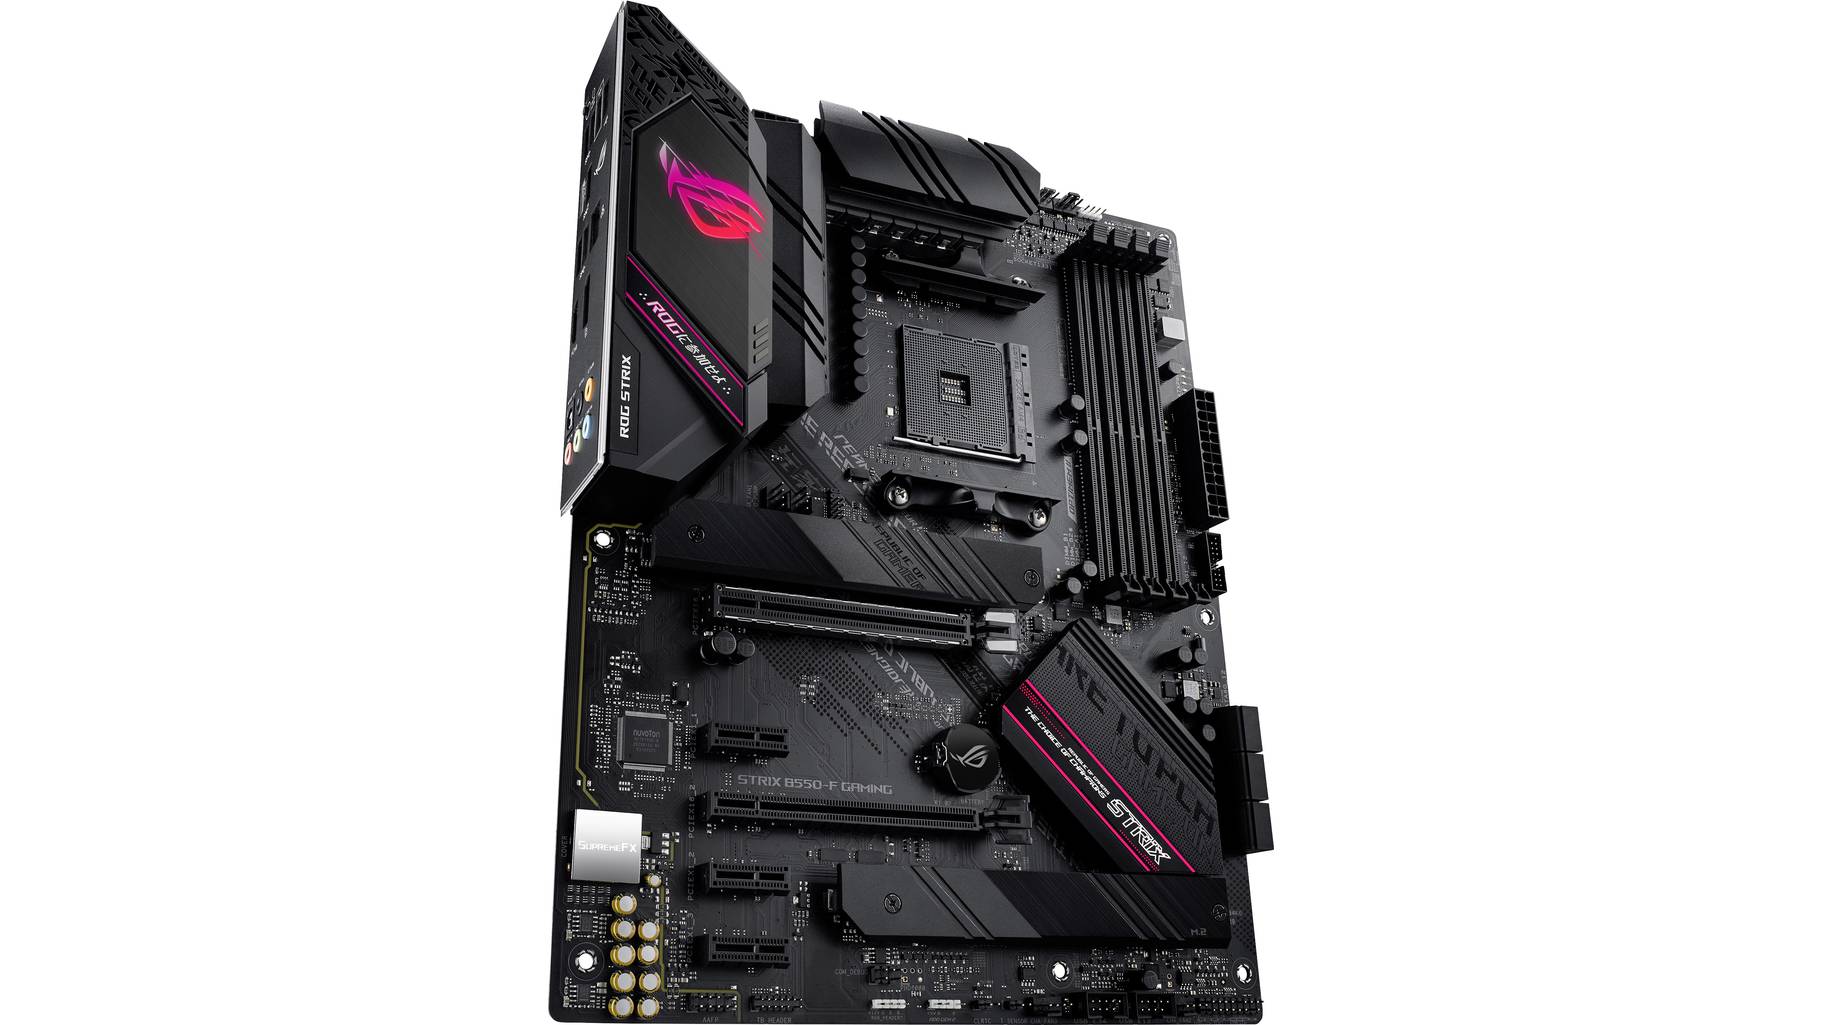 PC Bundle • AMD Ryzen 5 5600X • Asus Rog Strix B550-F Gaming • 64GB DDR4-3200 Ram Kit